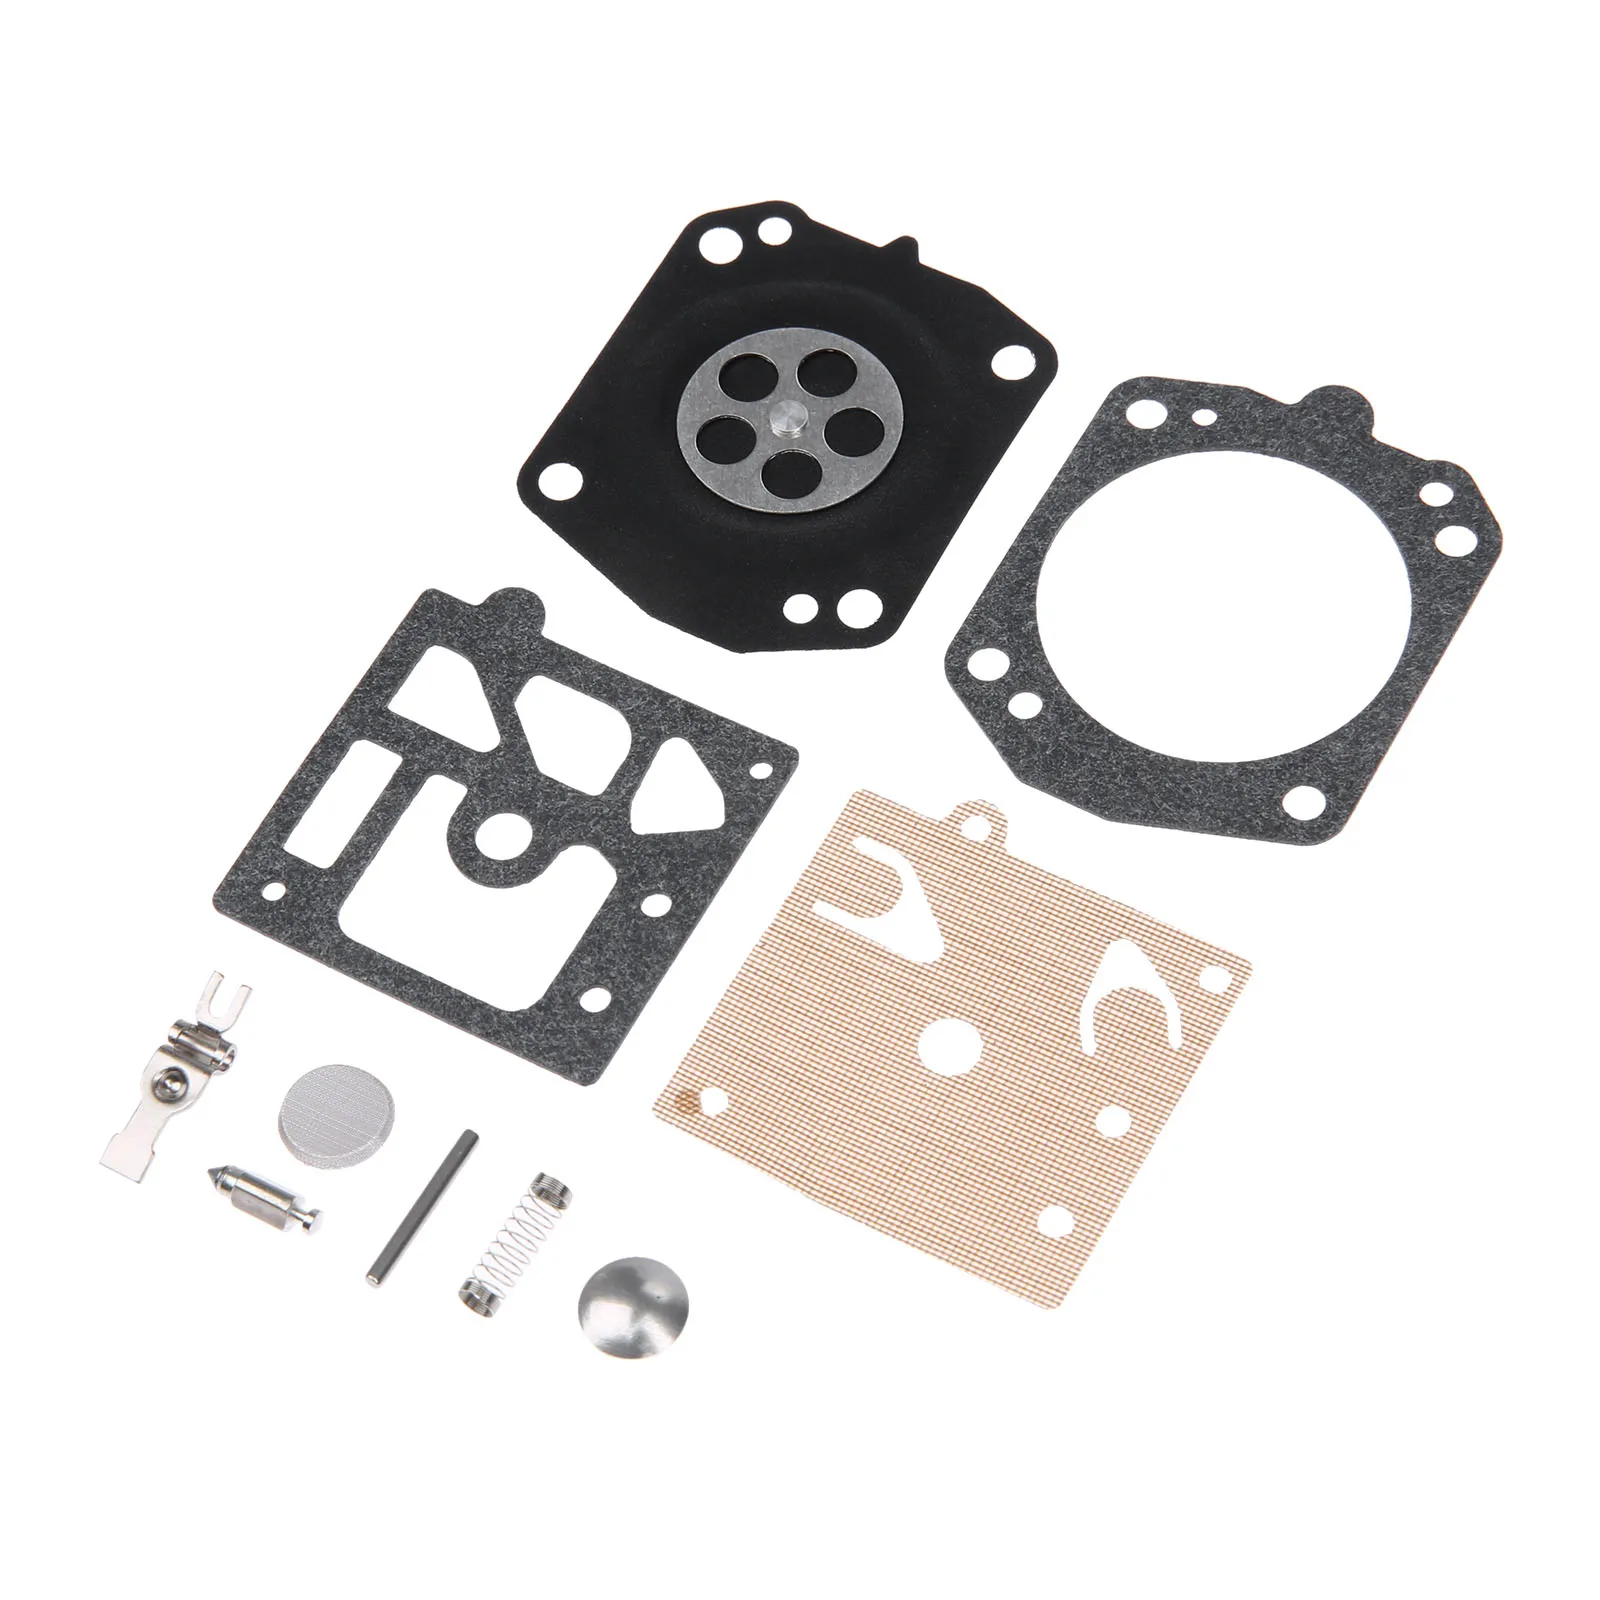 

4Pcs/set Carburetor Carb Rebuild Kit for Walbro 029 310 039 044 046 MS270 MS280 MS290 MS290 MS341 MS361 MS390 441 FS500 Chainsaw